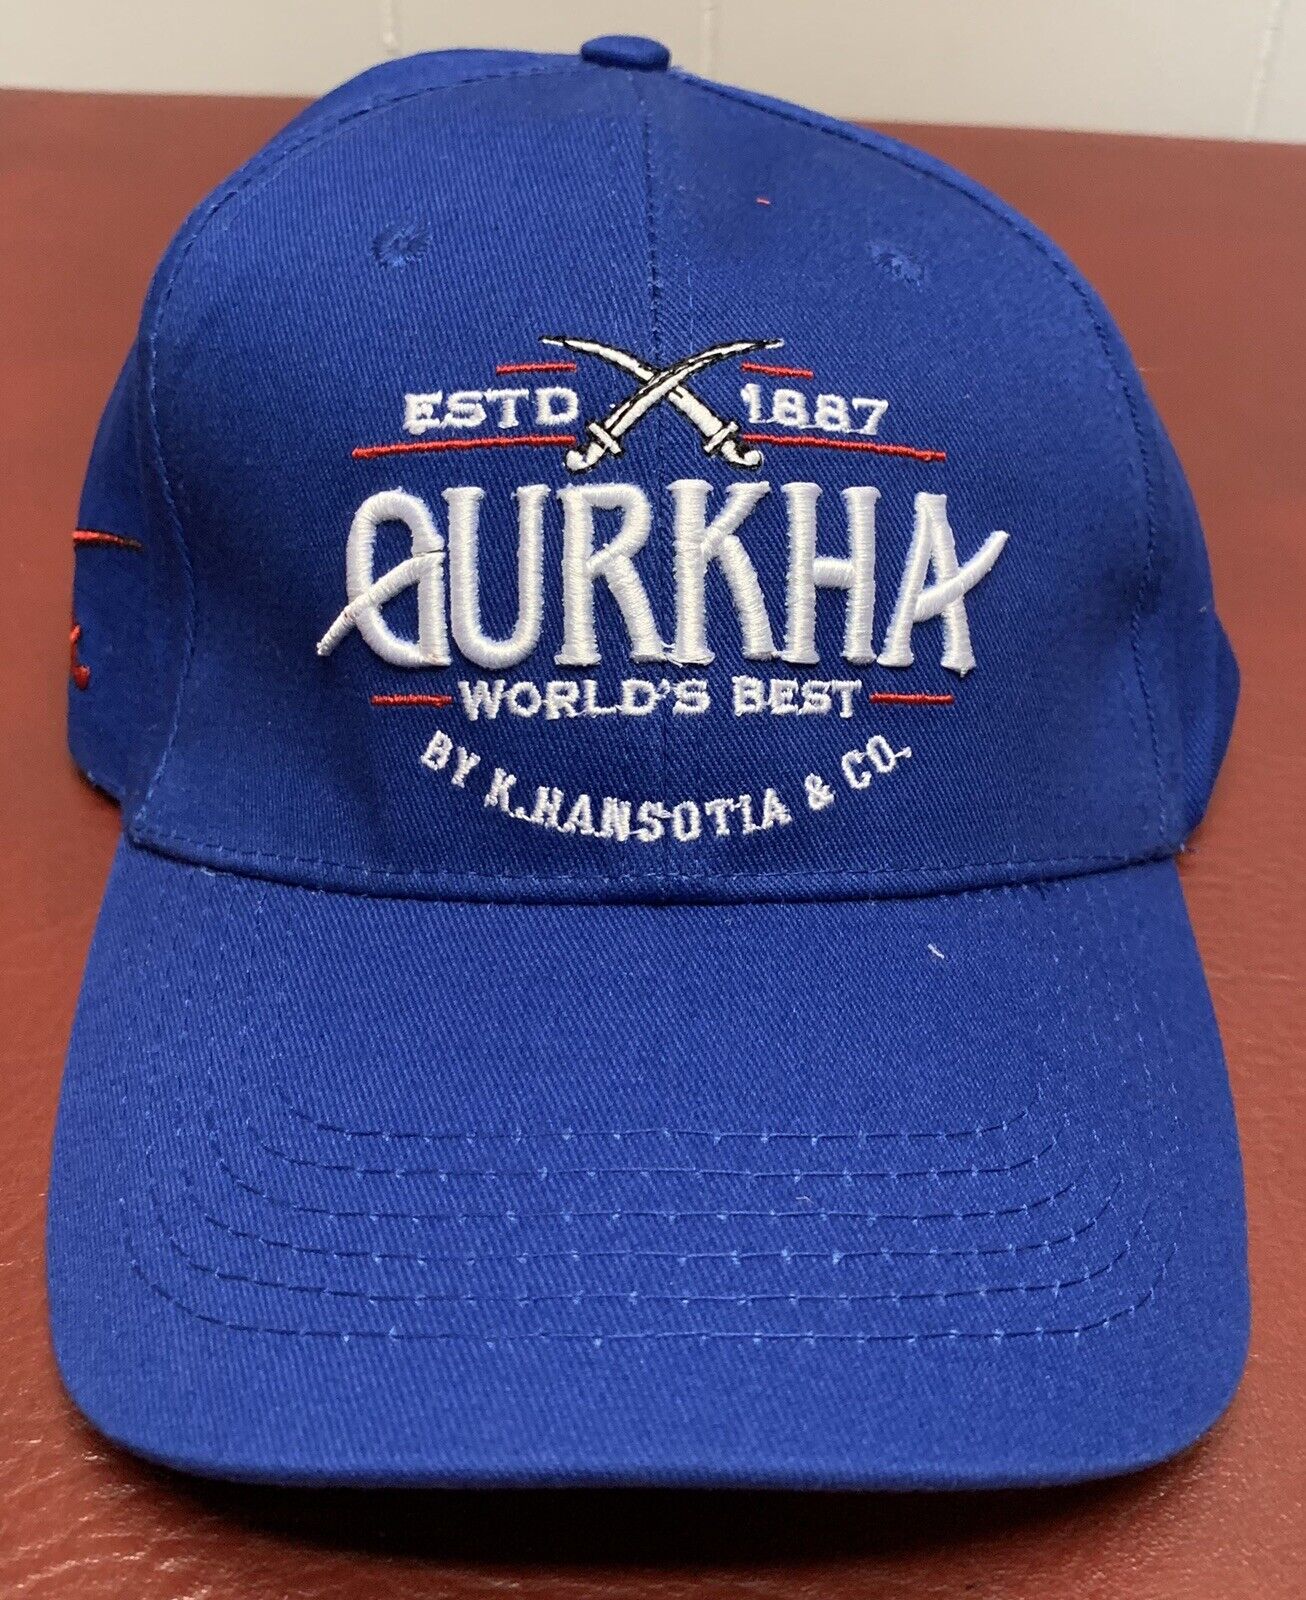 Gurkha Cigars Baseball Cap Hat World's Best K. Hansotia & Co.